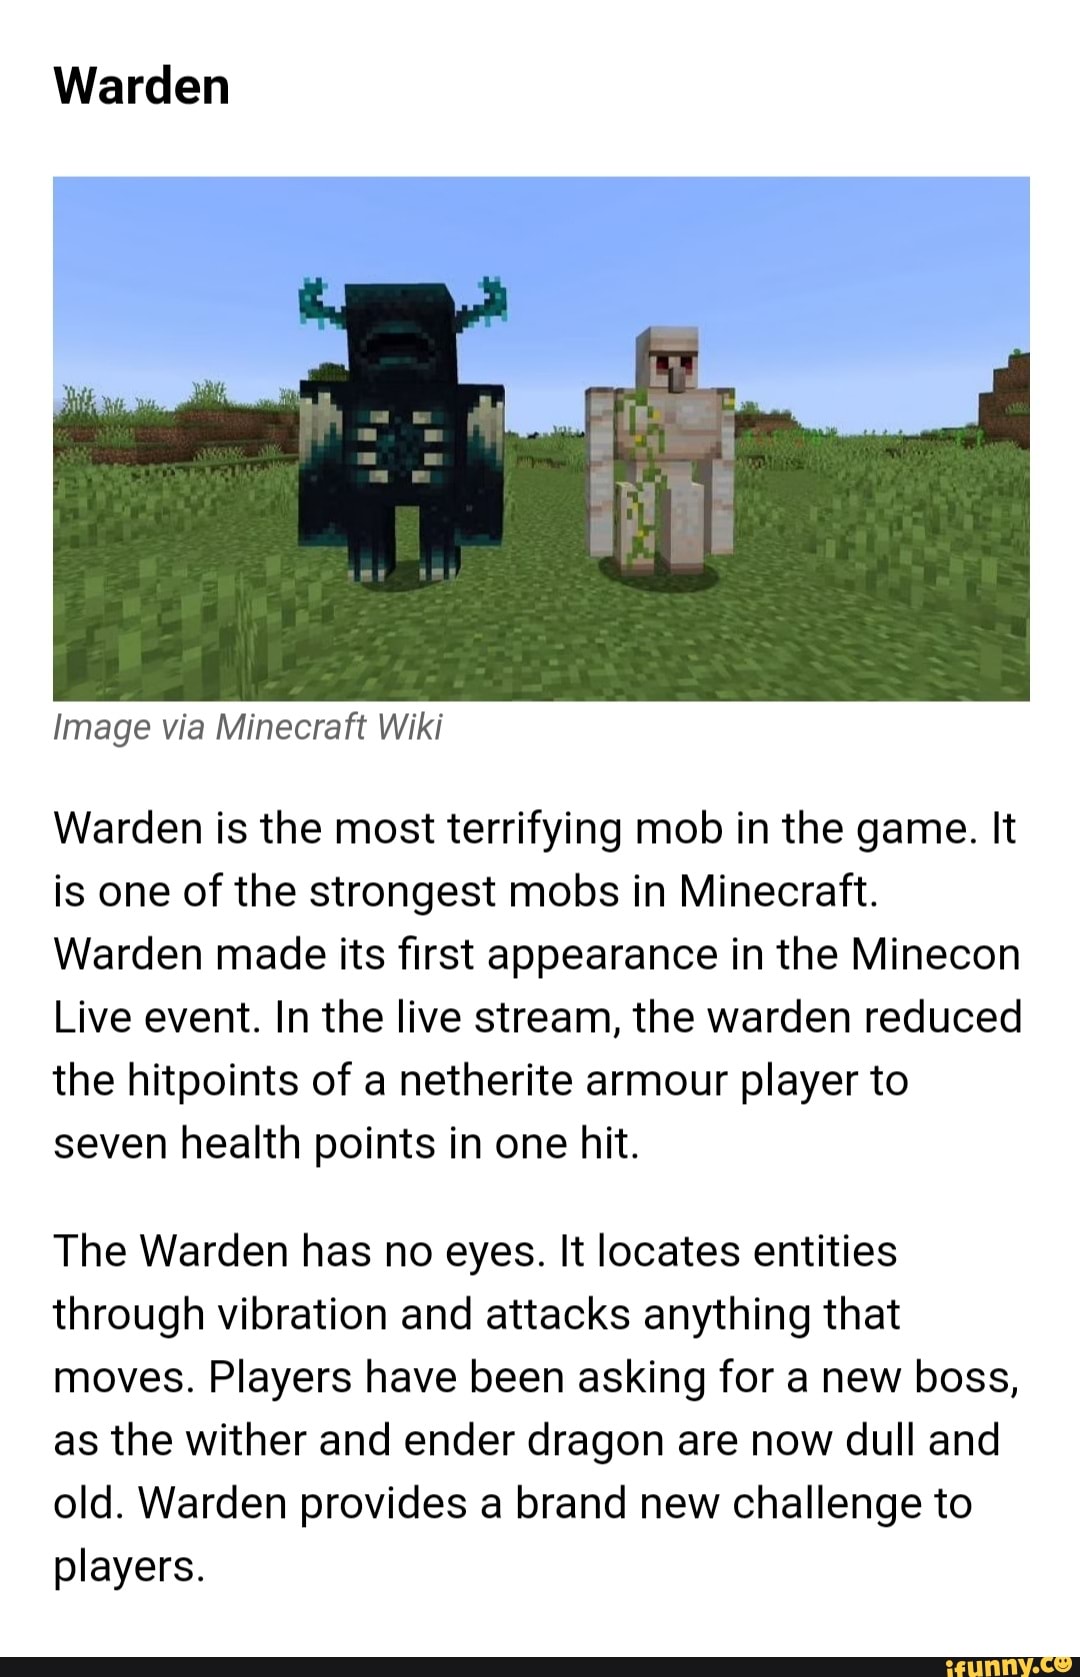 Wither – Minecraft Wiki